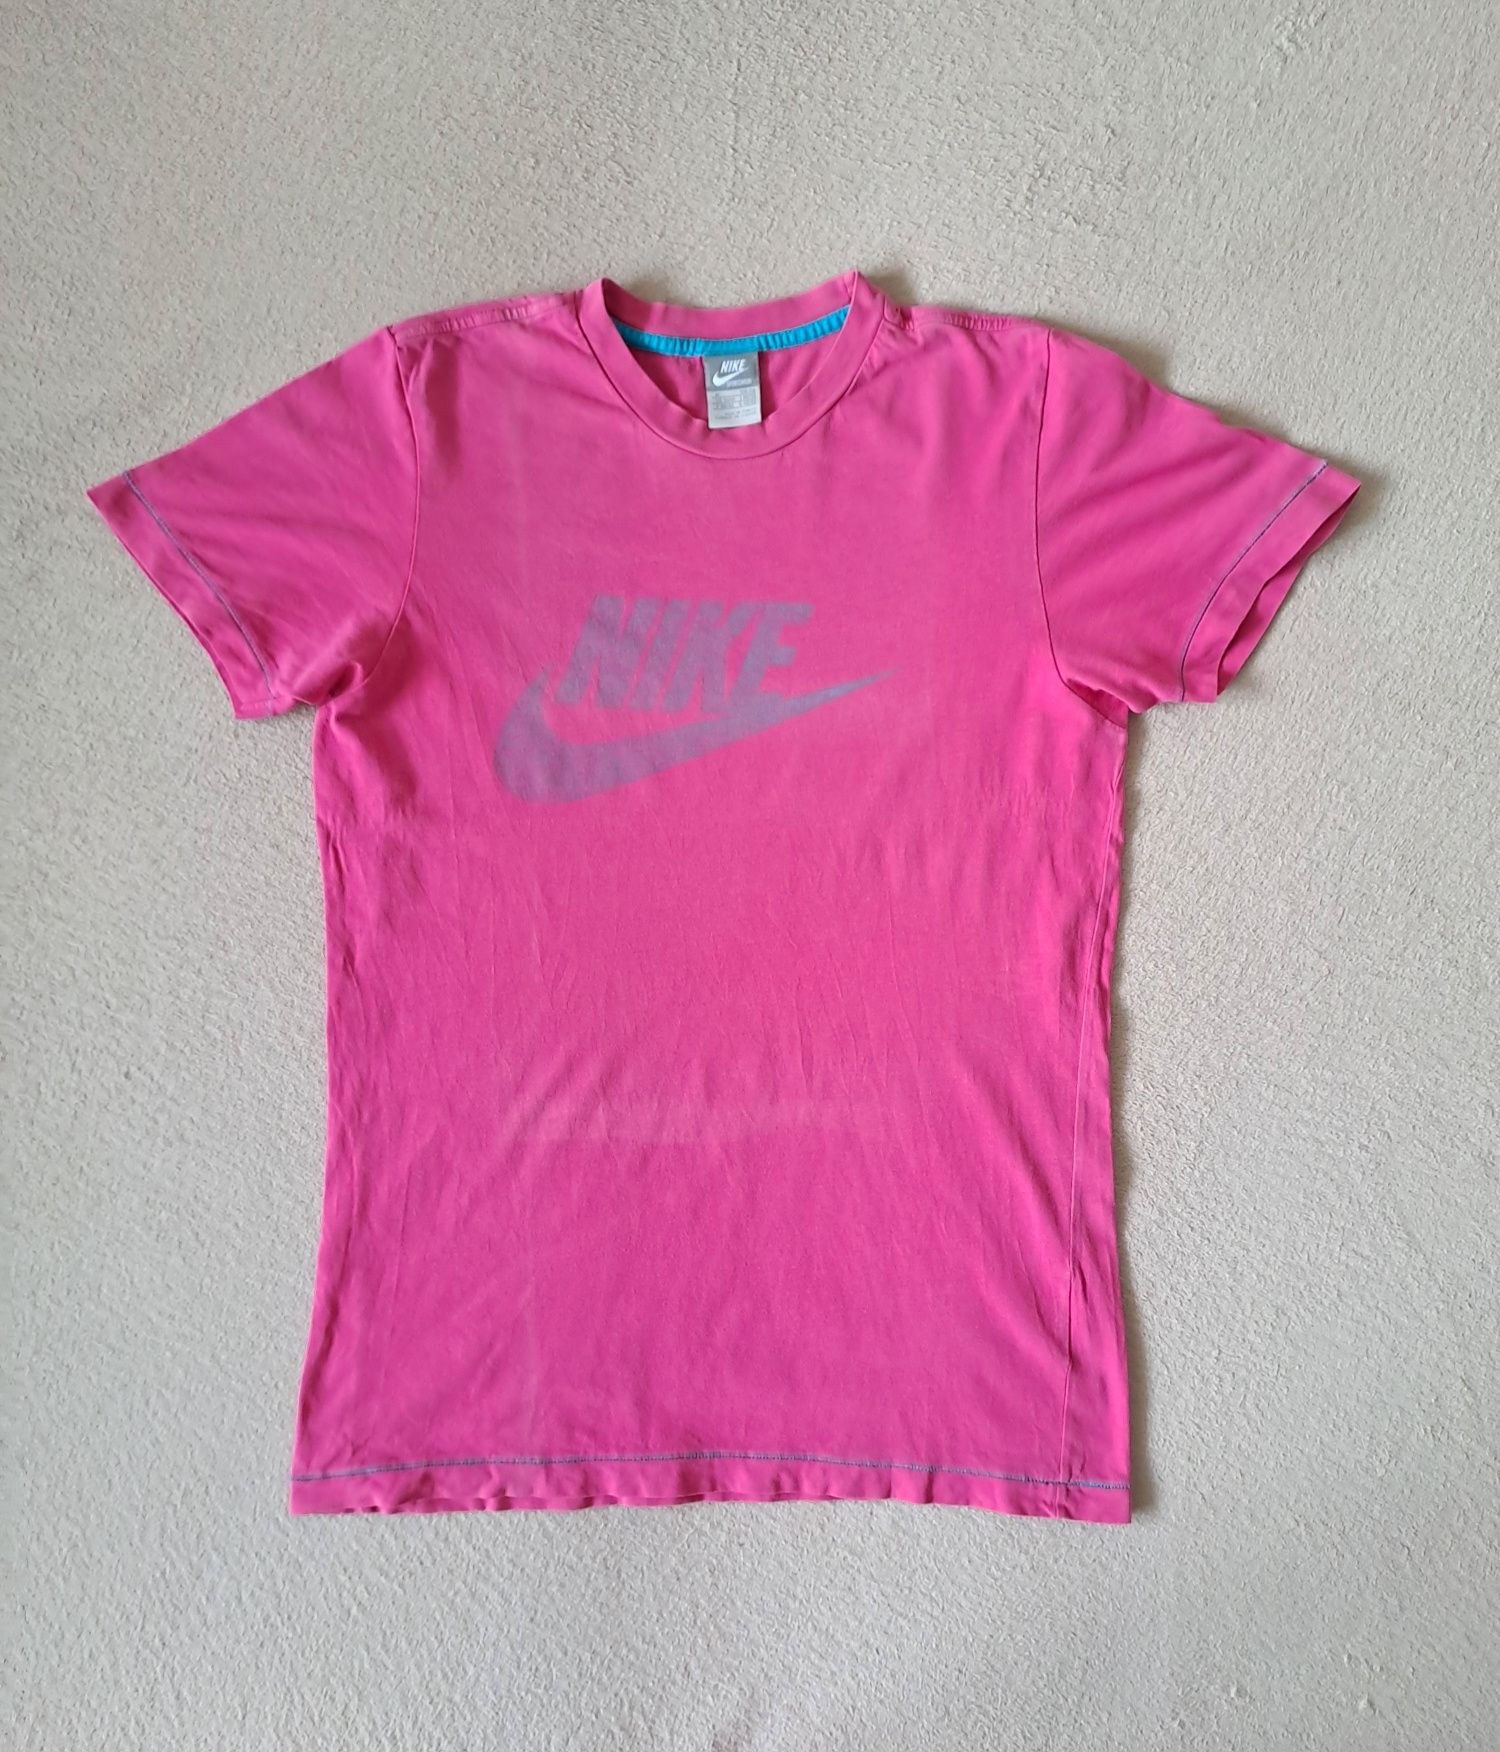 ZESTAW 7 koszulek roz. M Nike Ralph Lauren H&M